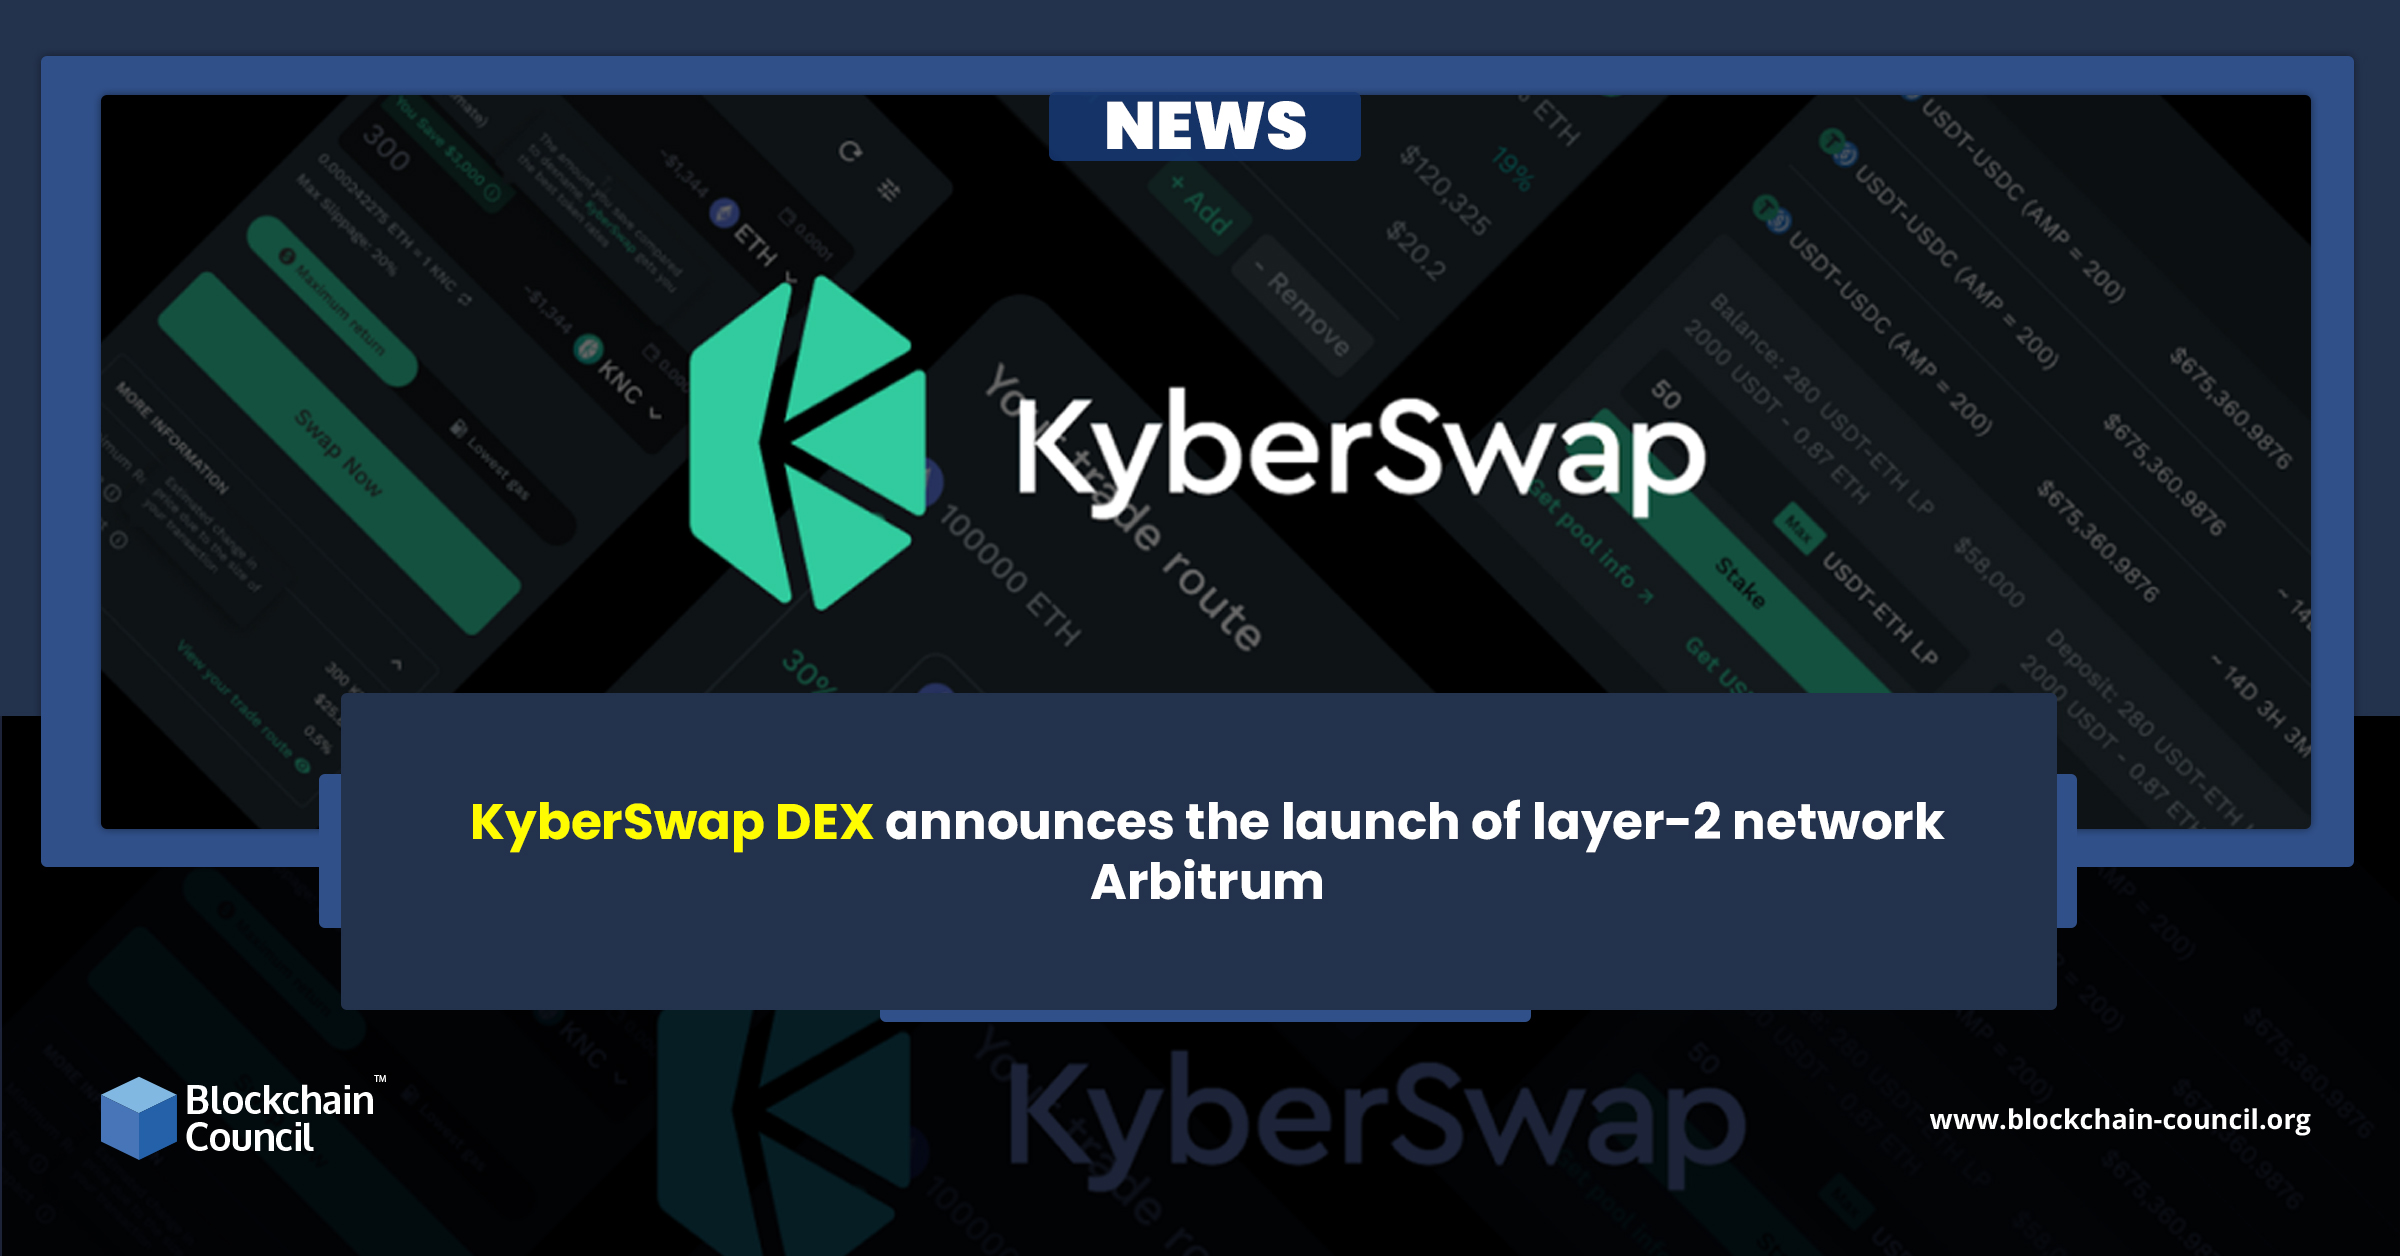 KyberSwap DEX announces the launch of layer-2 network Arbitrum